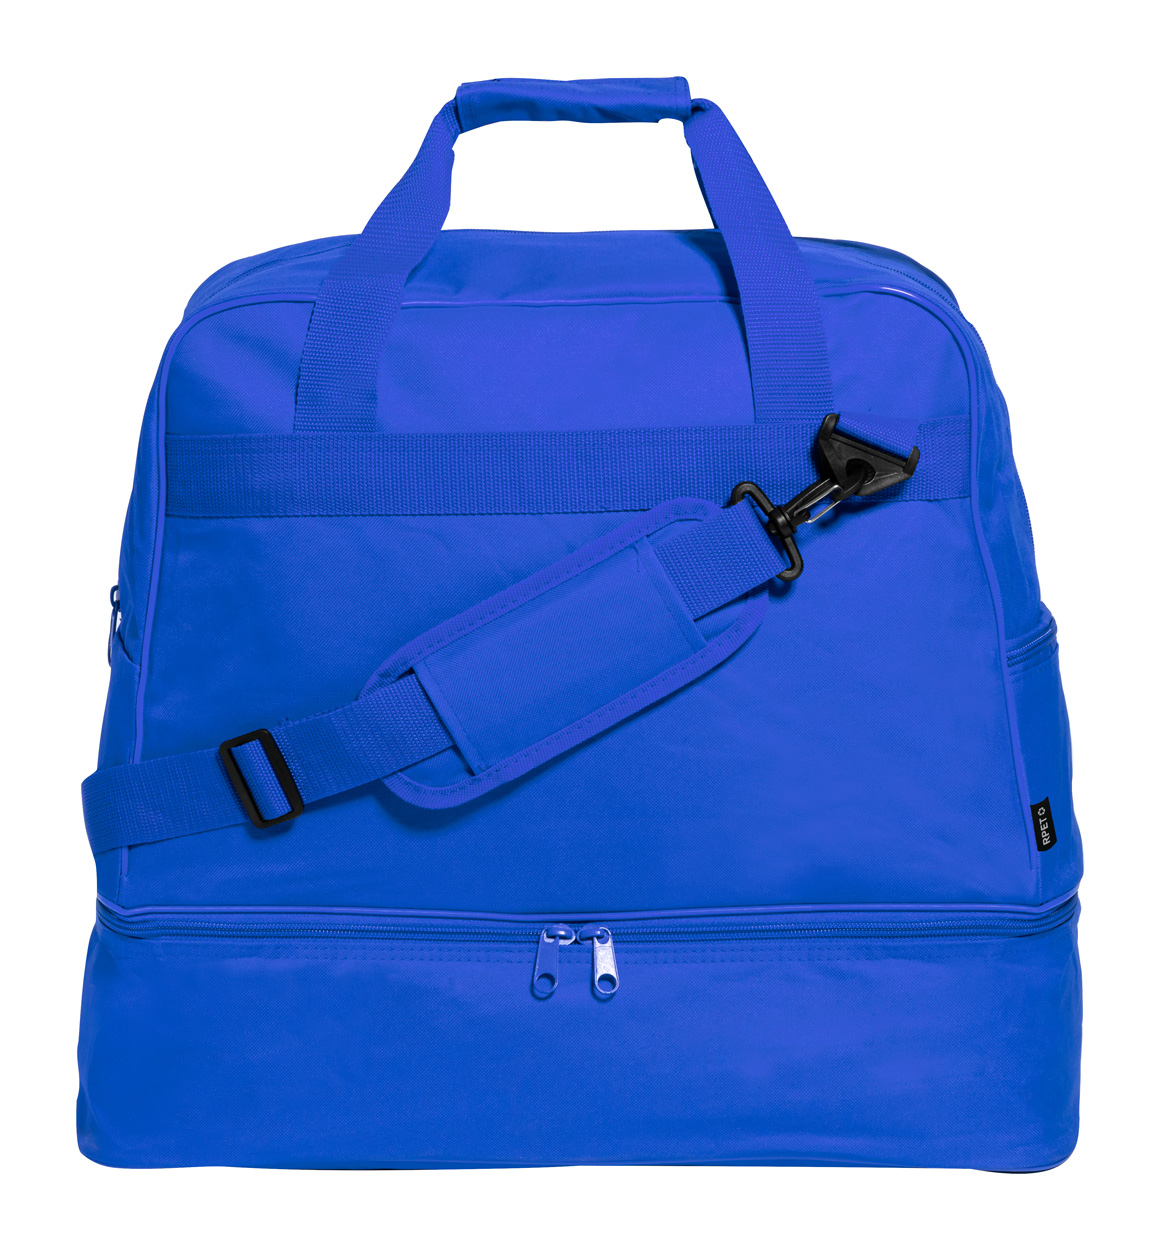 Wistol RPET sports bag - blau